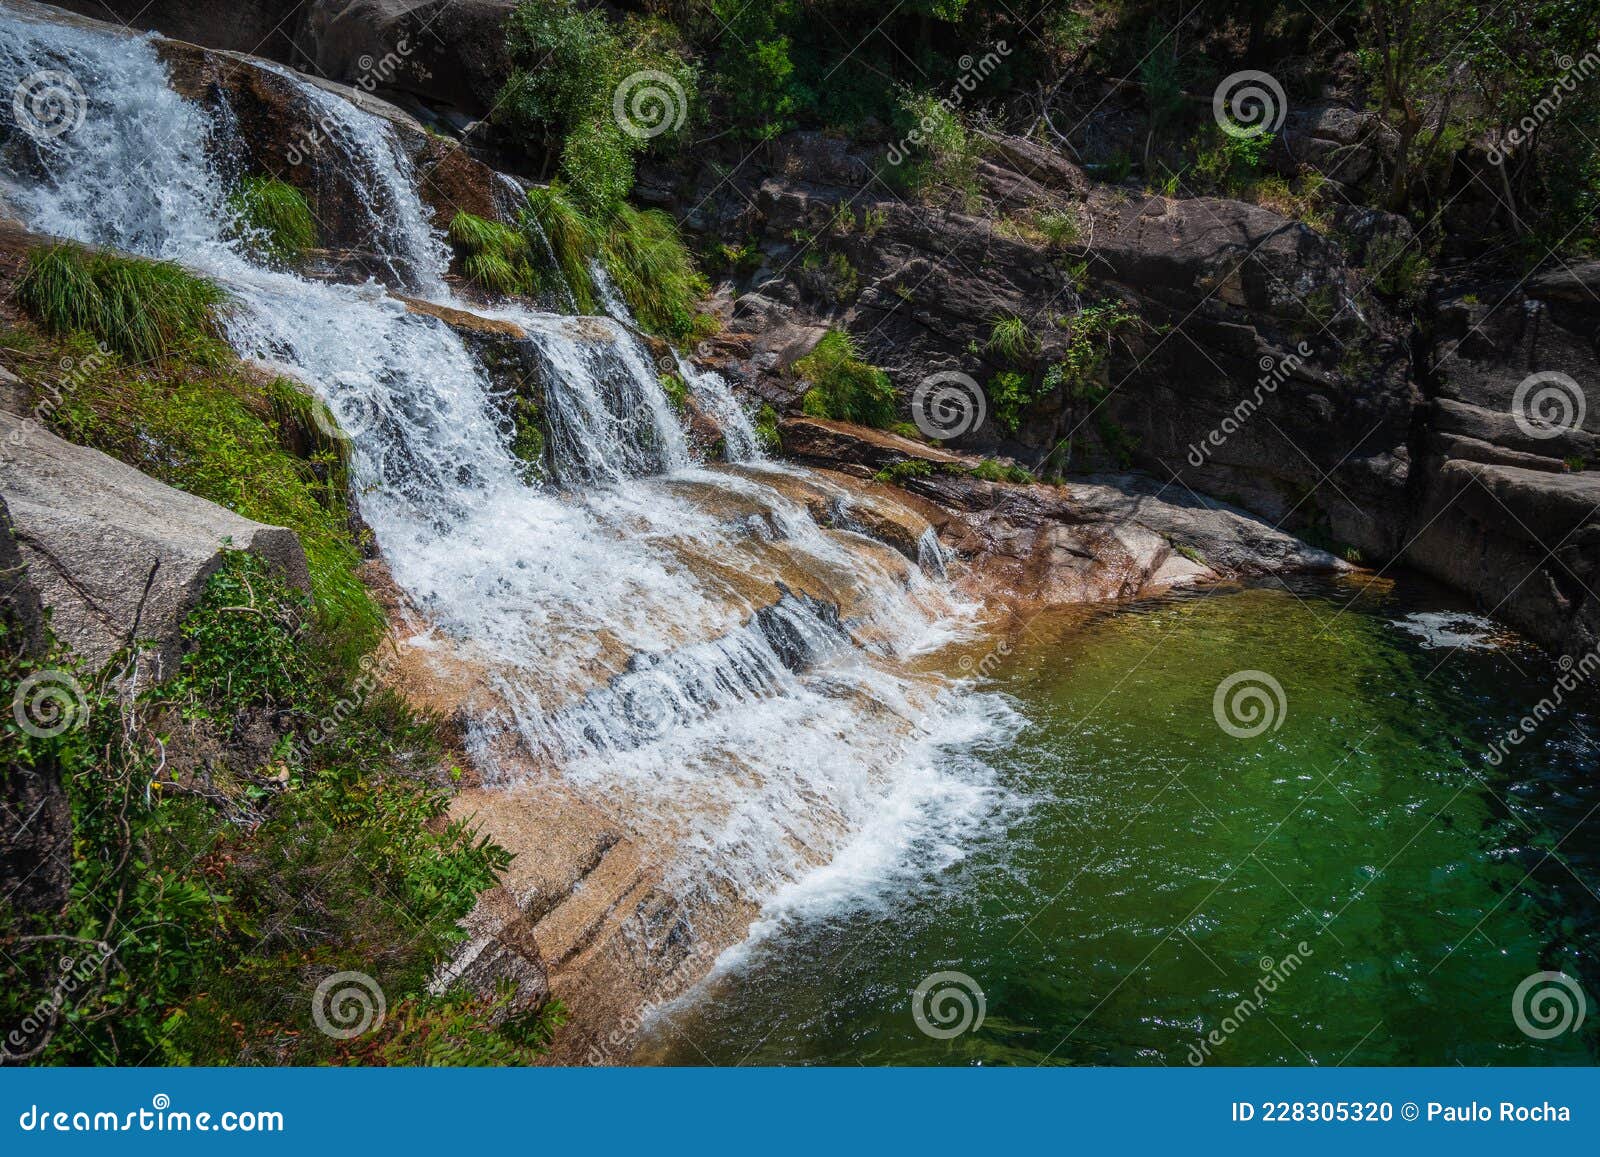 fecha de barjas waterfall in peneda-geres national park, portugal